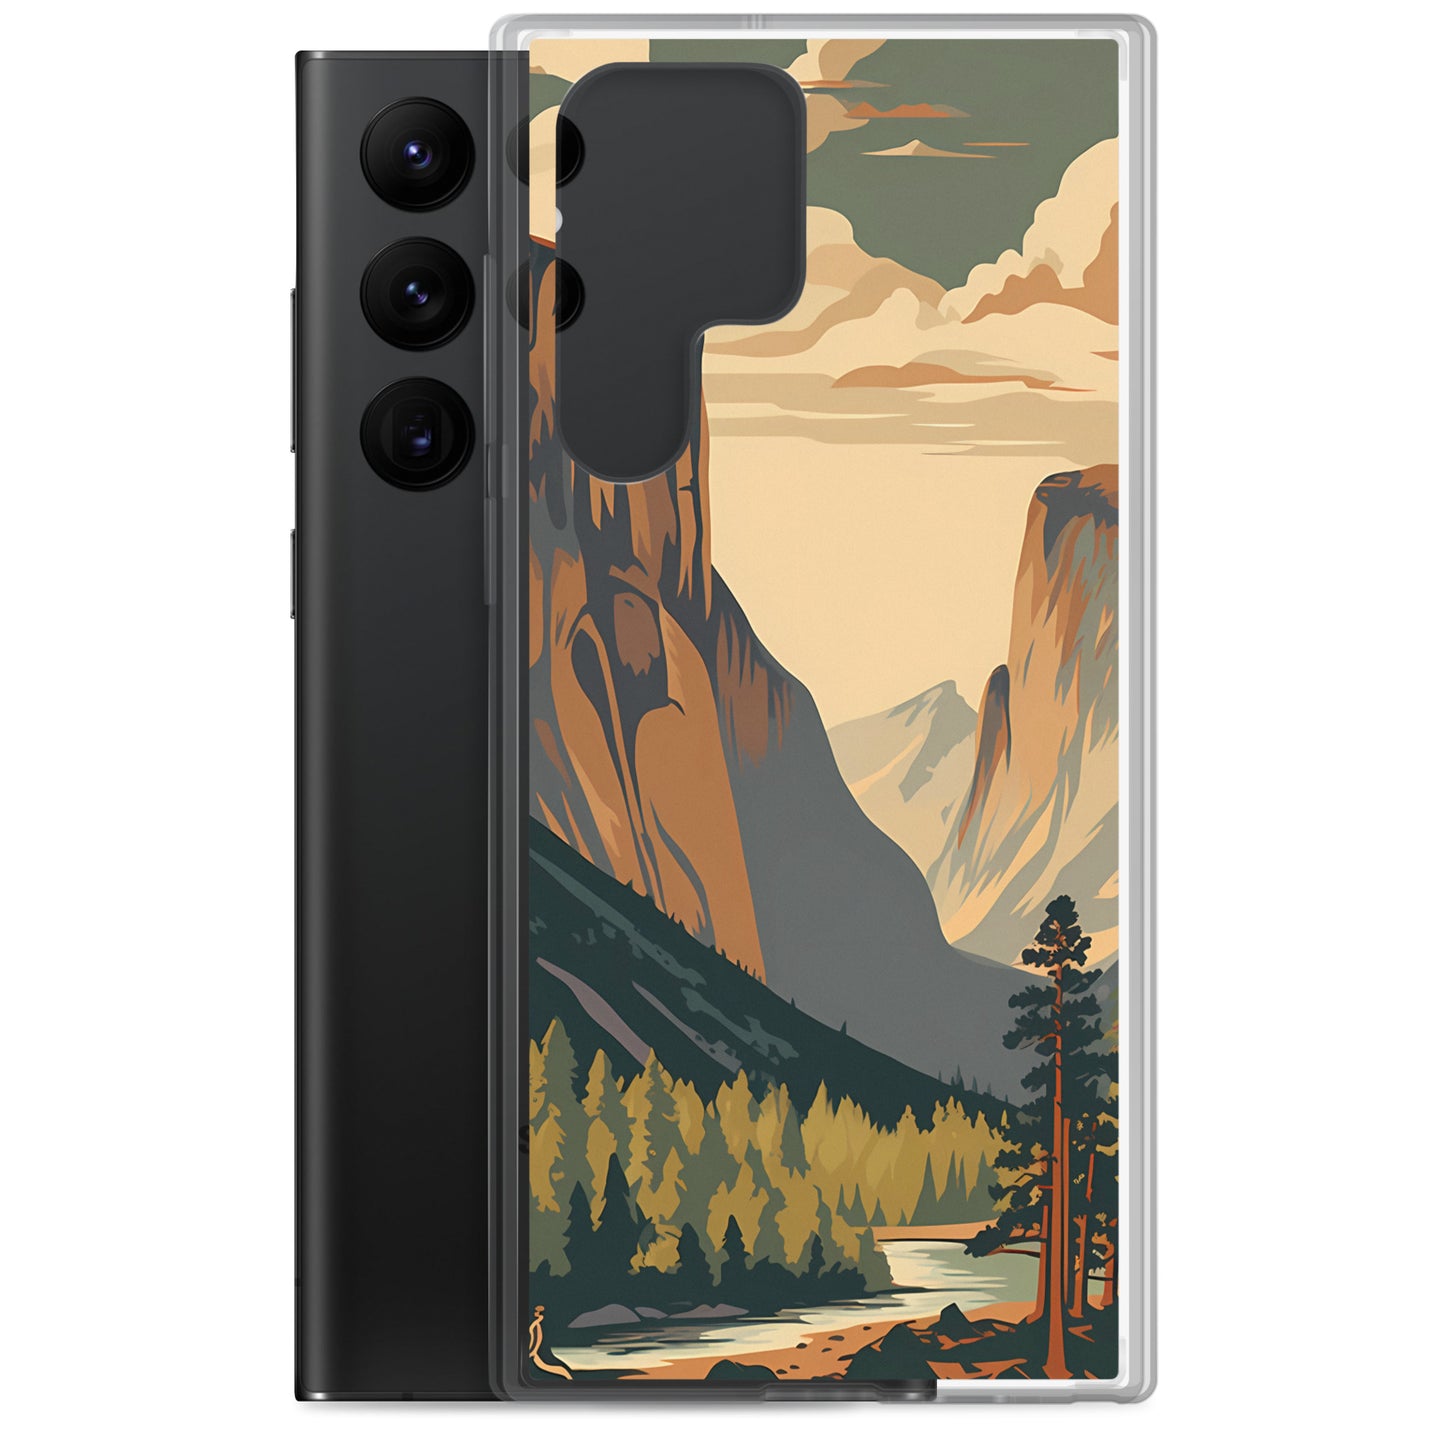 Samsung Phone Case - National Parks - Yosemite